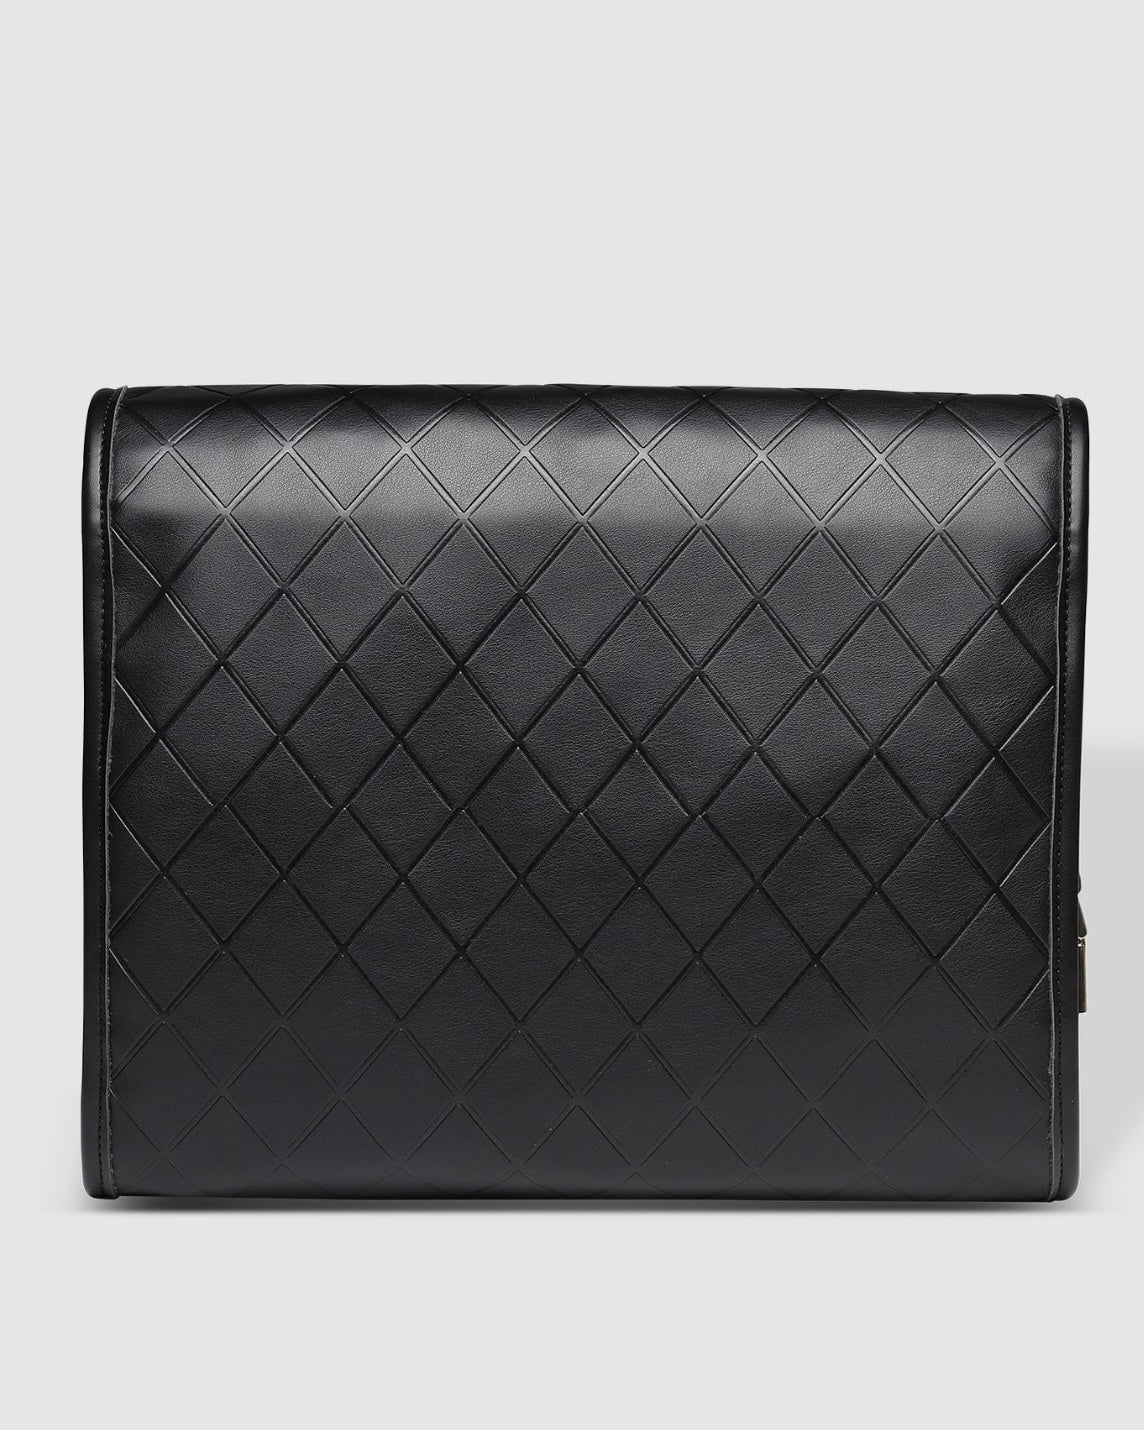 Cleo Makeup Case/Toiletry Bag (Black)